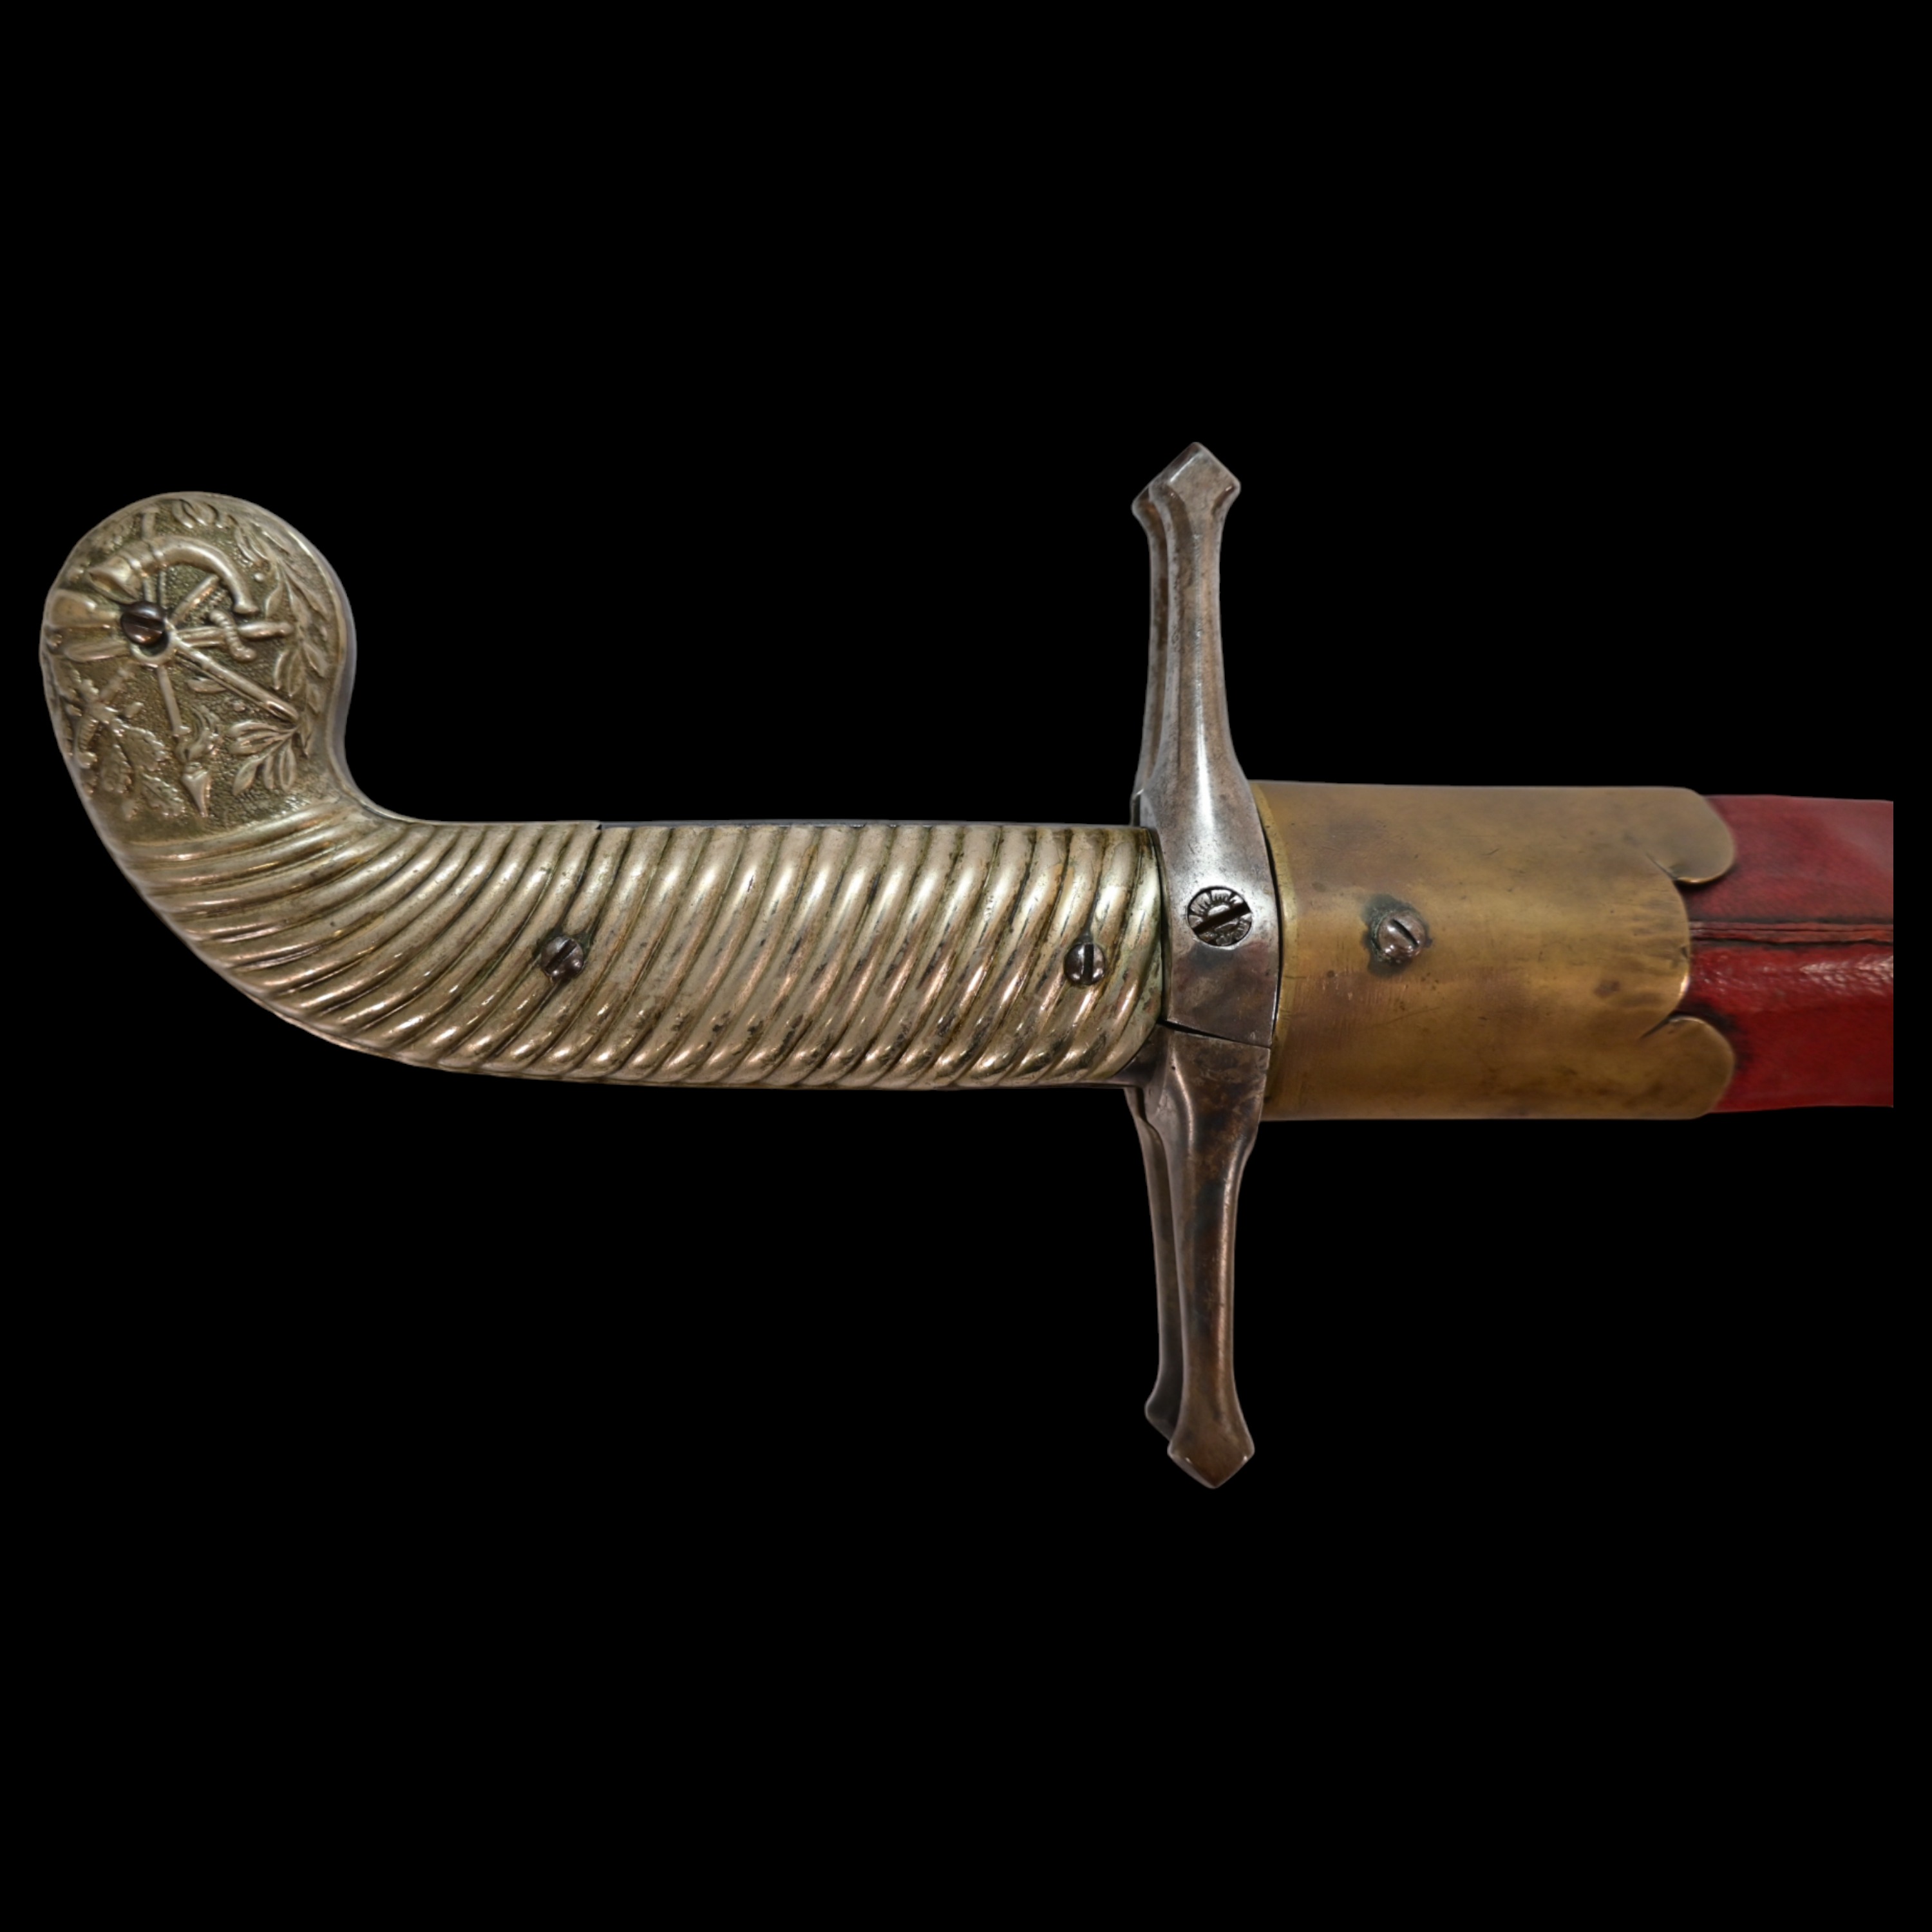 French D.B Dumonthier Dagger, Percussion Double Barrel Pistol, circa 1855-60. - Image 6 of 19